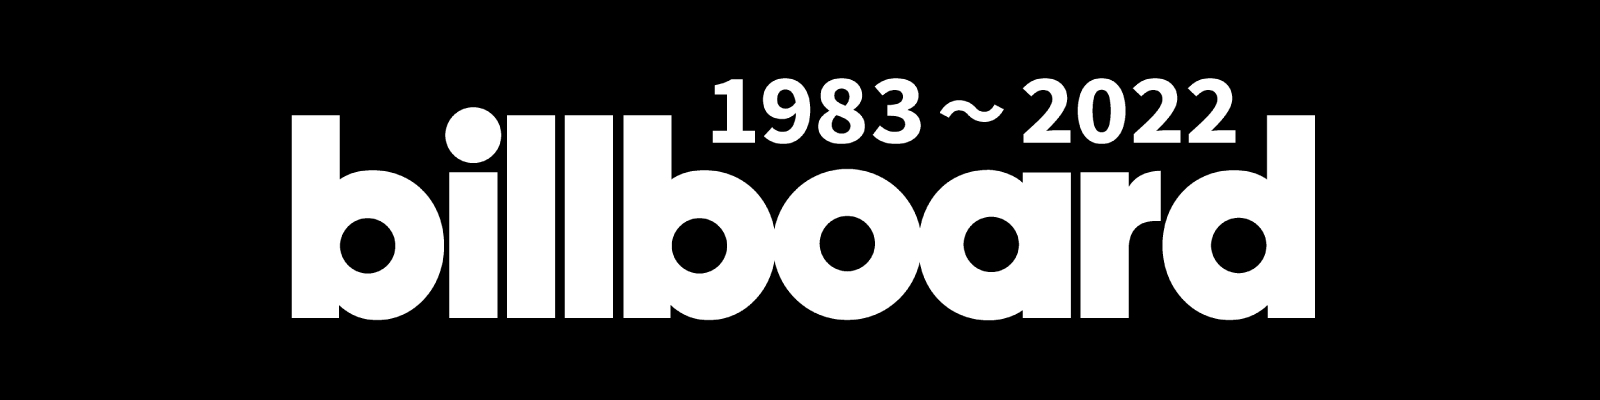 「billboard 1983-2022」番組へのメッセージ大募集！